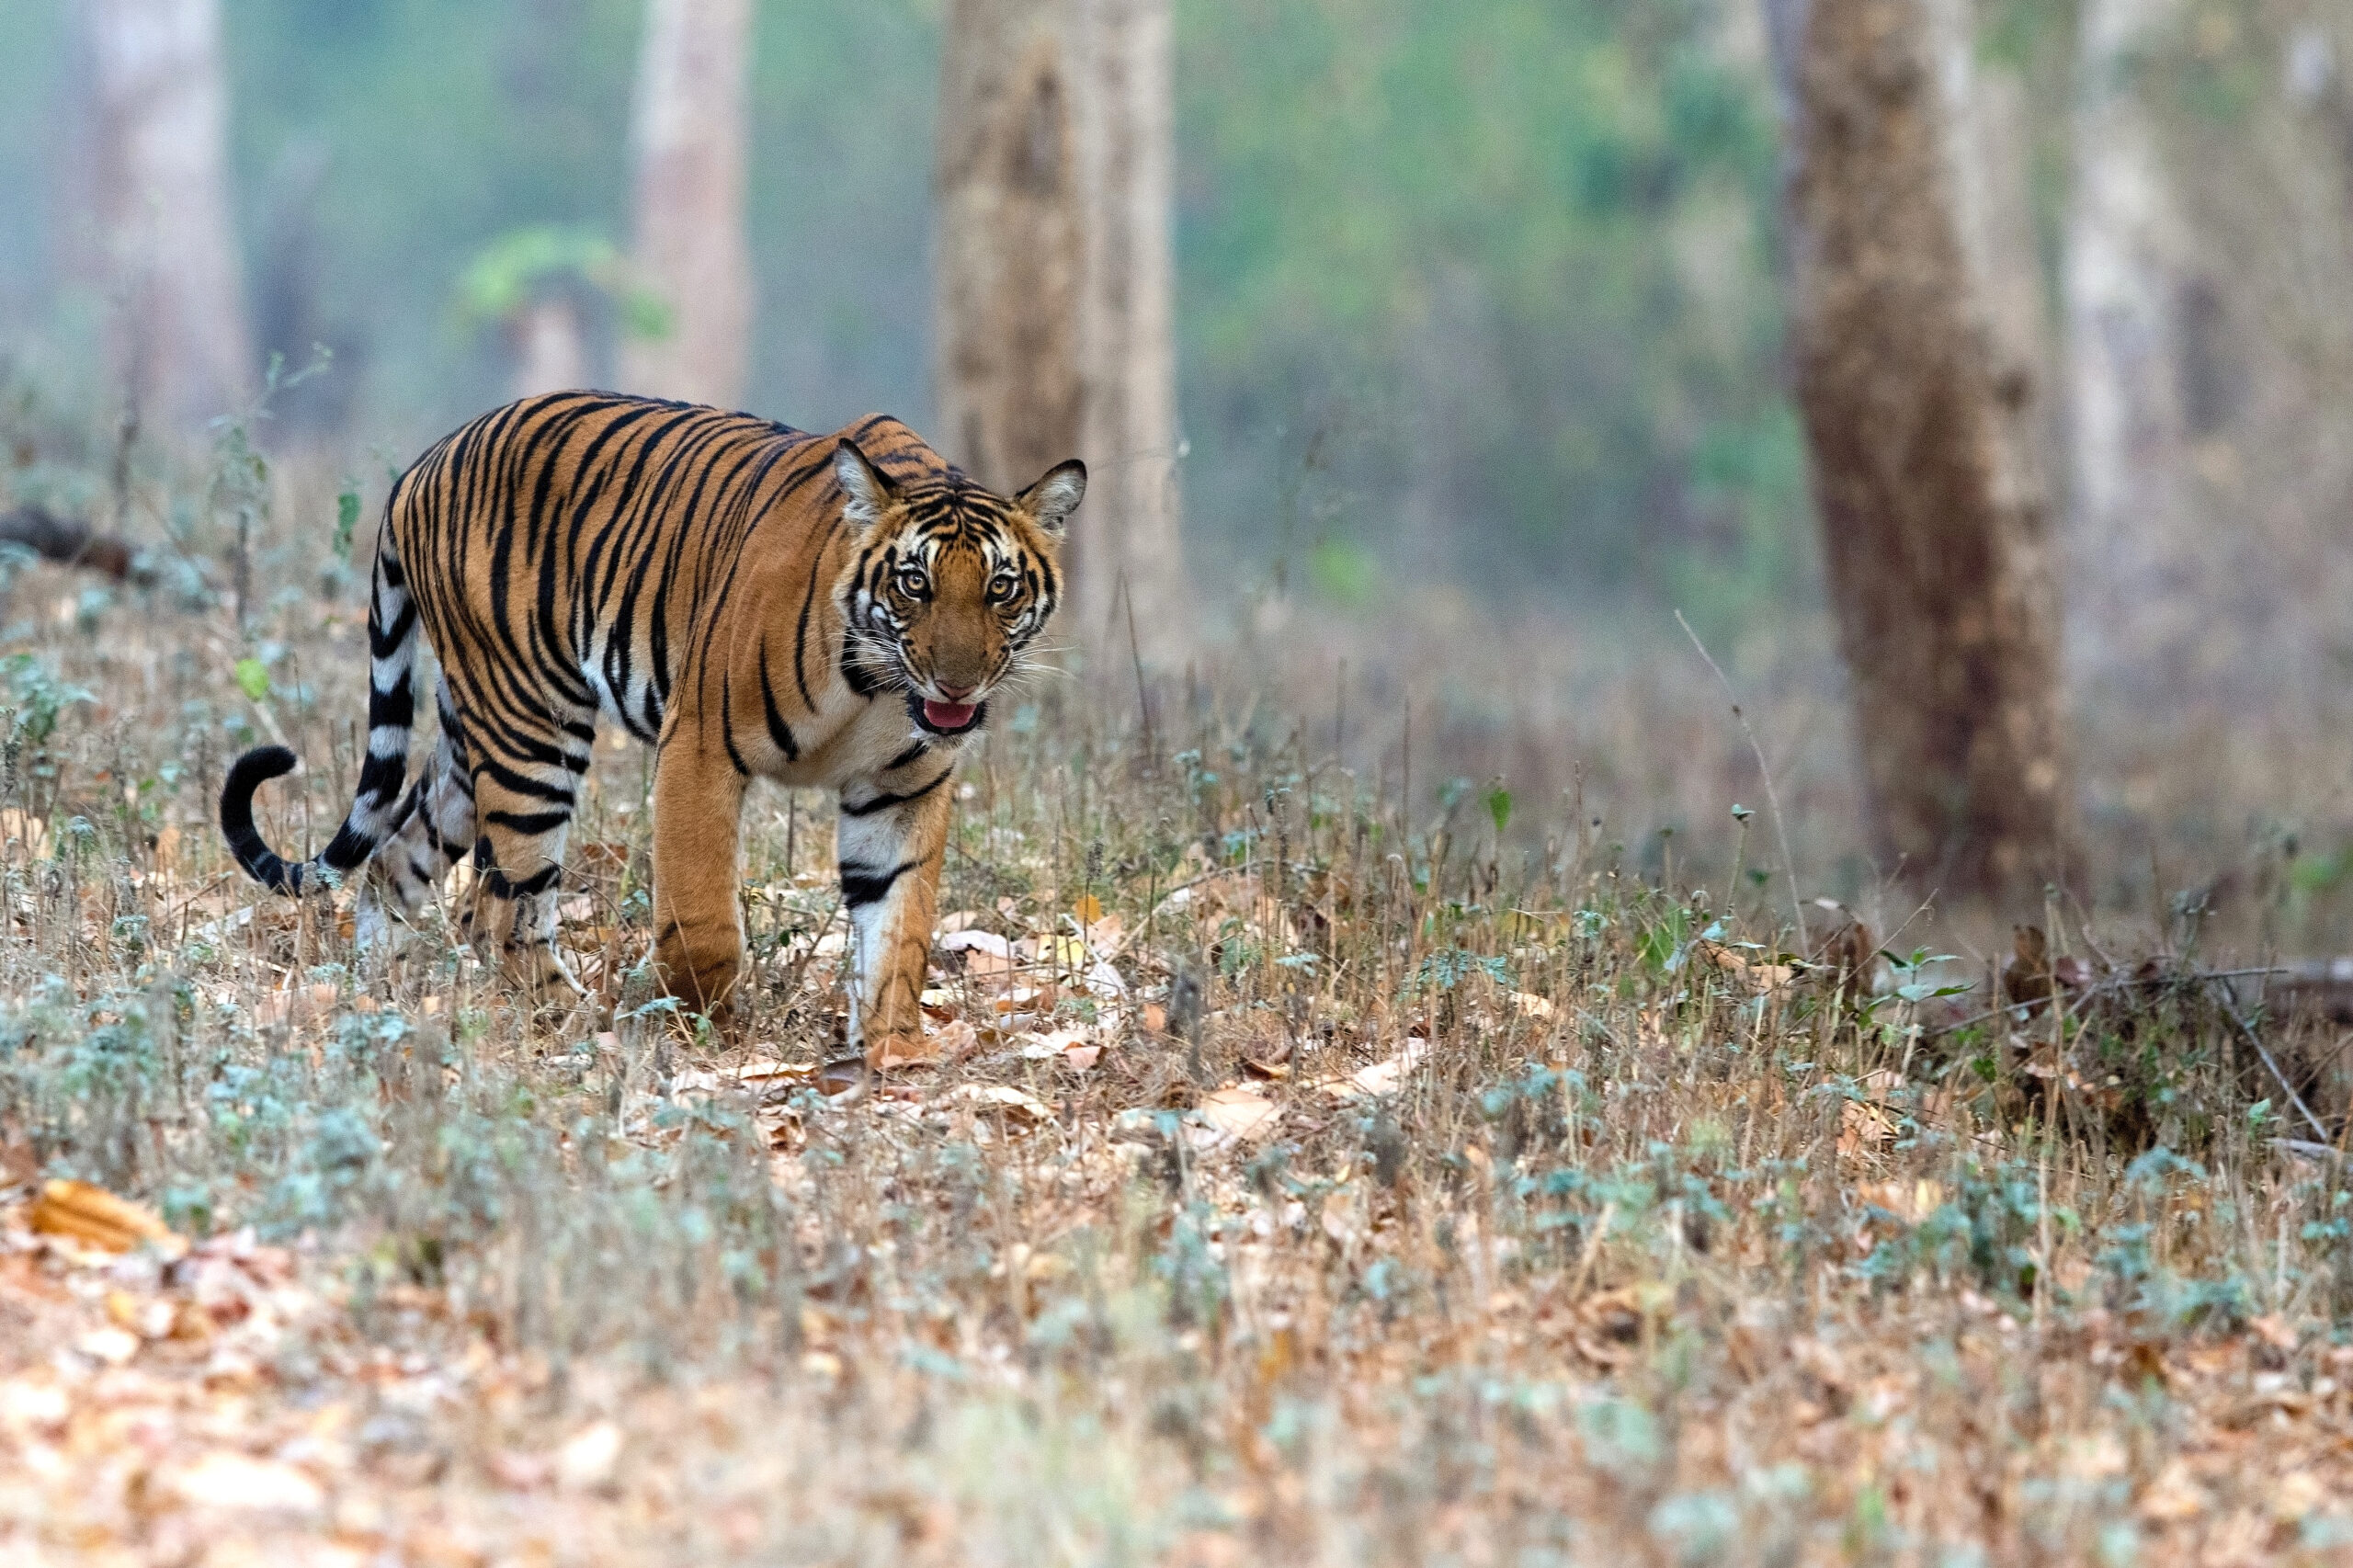 Royal Bengal tiger